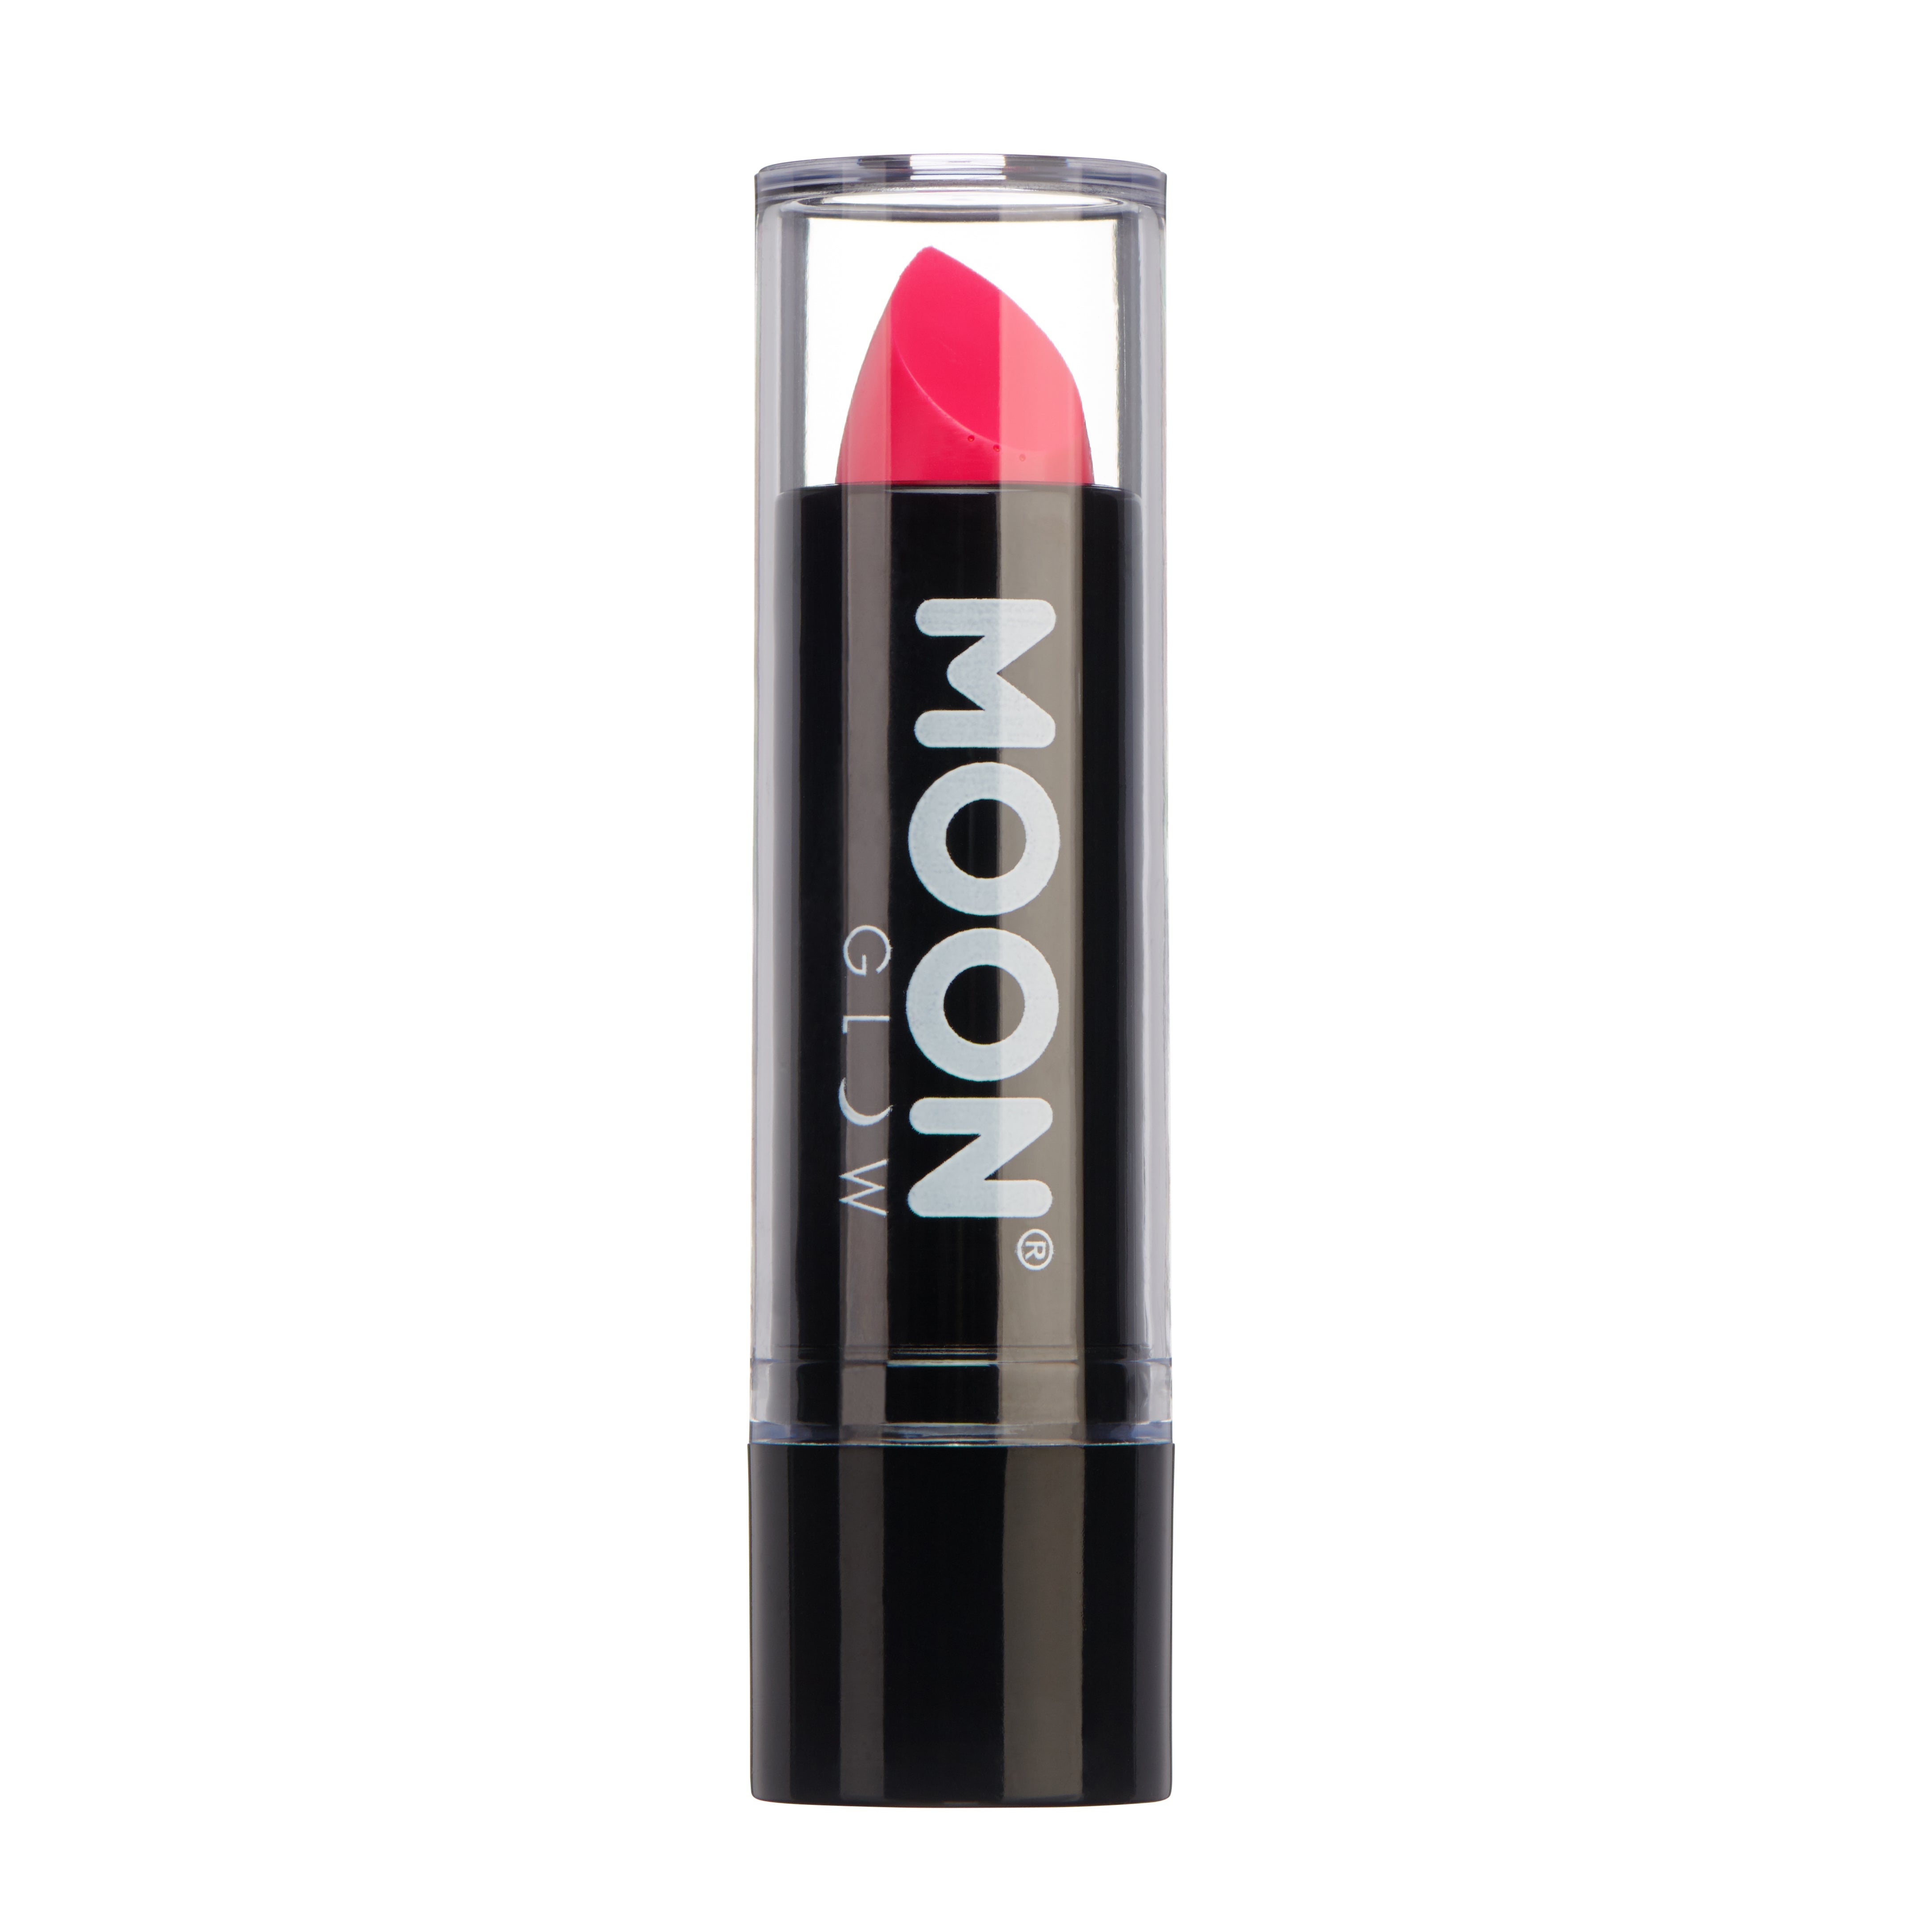 Intense Pink - Neon UV Glow Blacklight Lipstick, 5g. Cosmetically certified, FDA & Health Canada compliant and cruelty free.